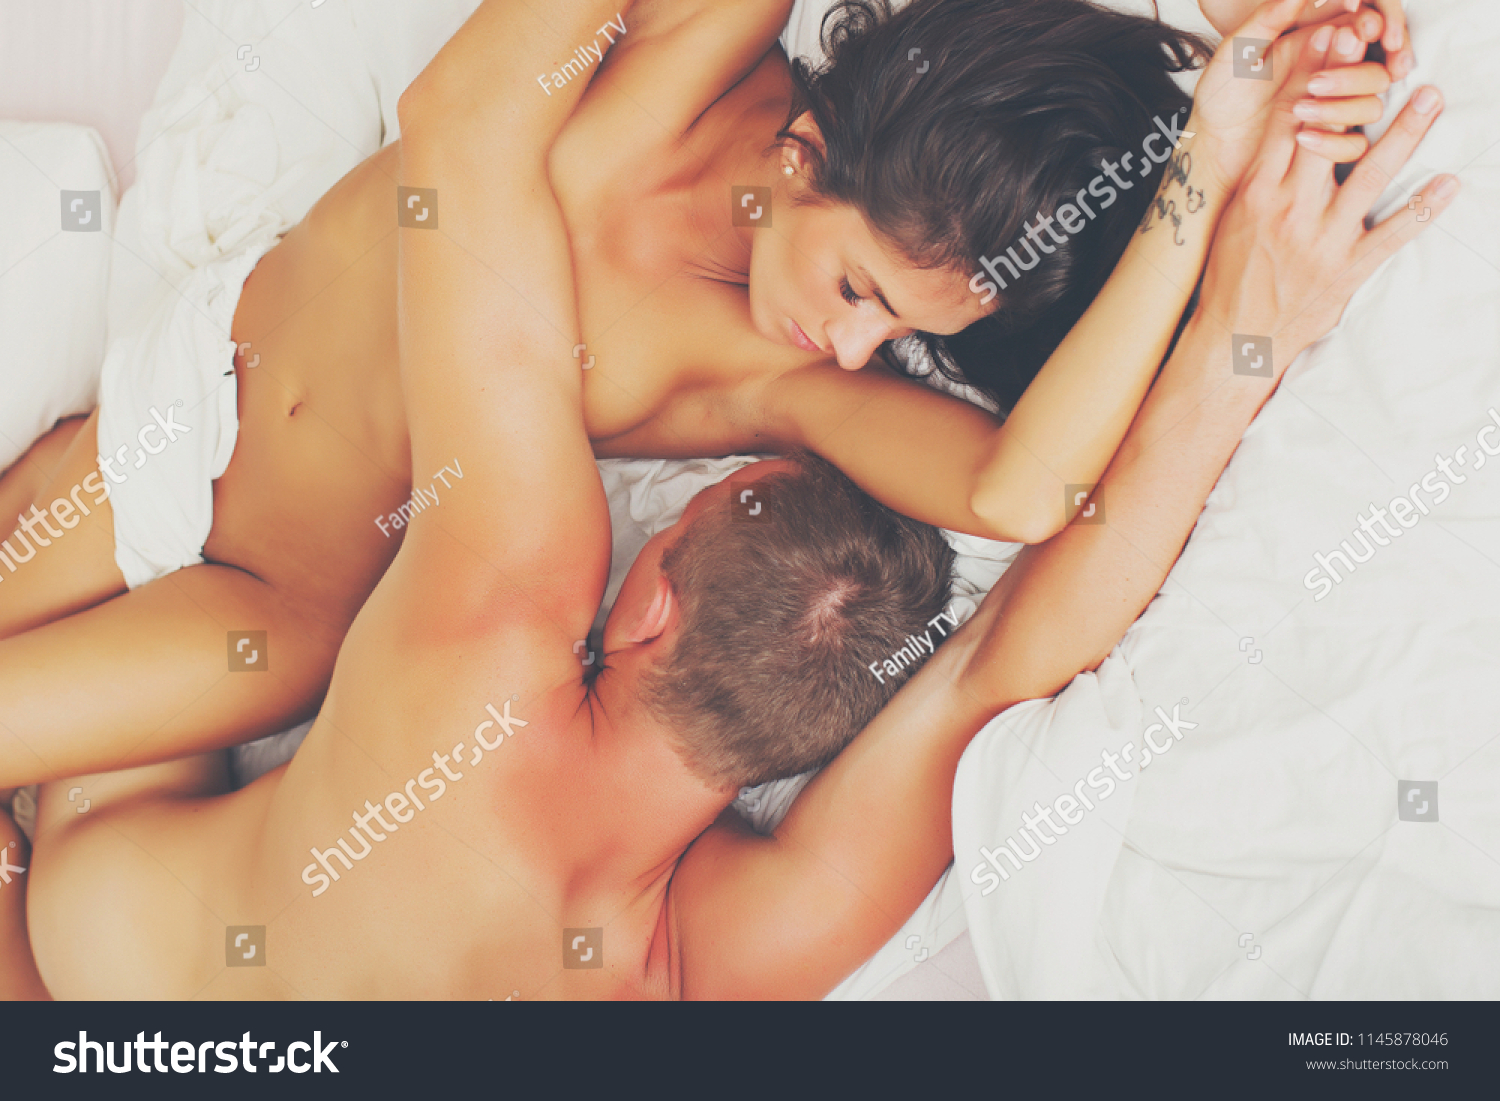 Naked sexy guys having sex